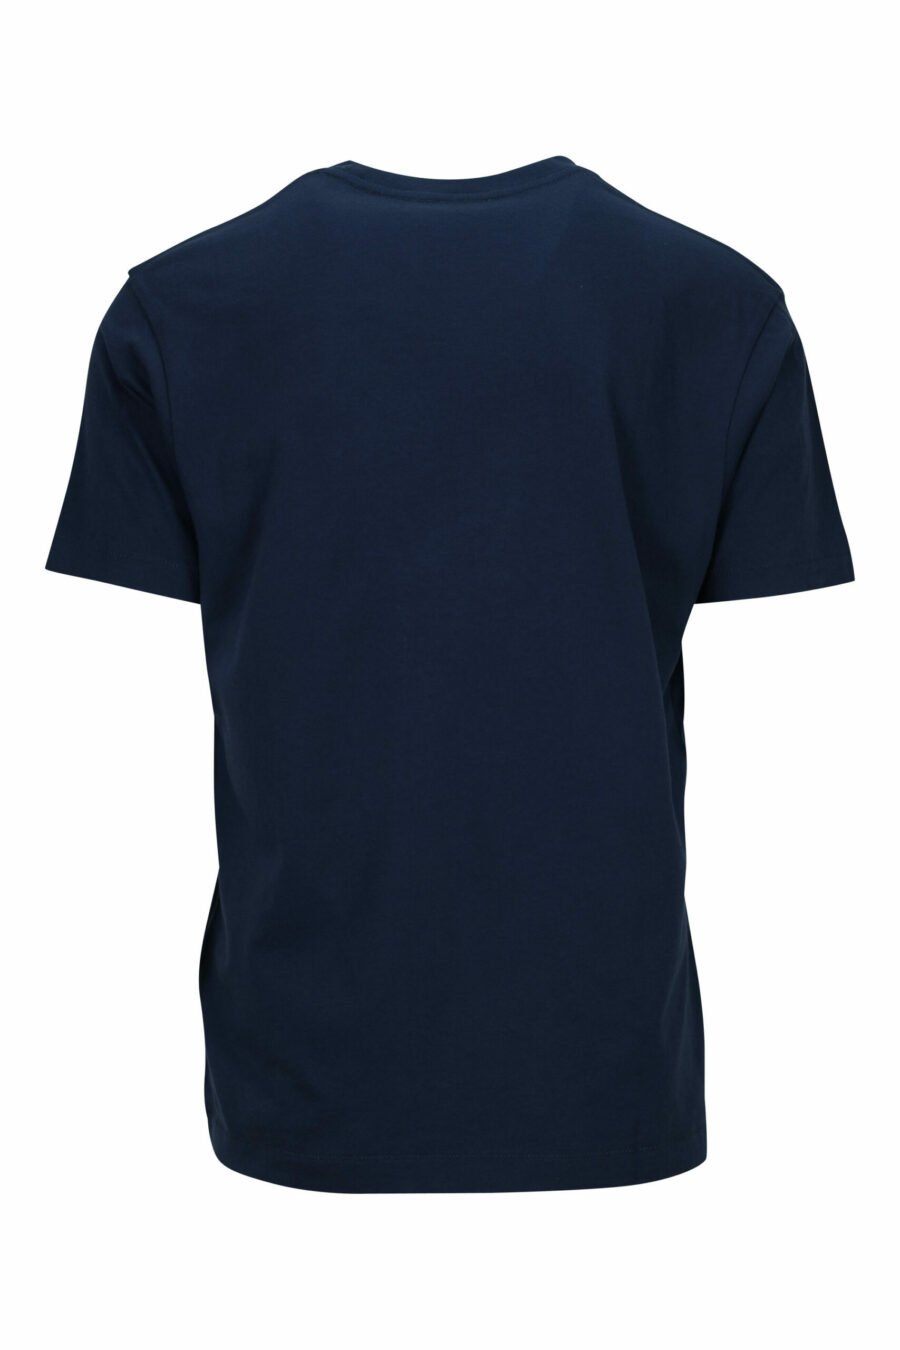 T-shirt azul com mini-logotipo redondo "Kenzo" - 3612230544475 1 à escala